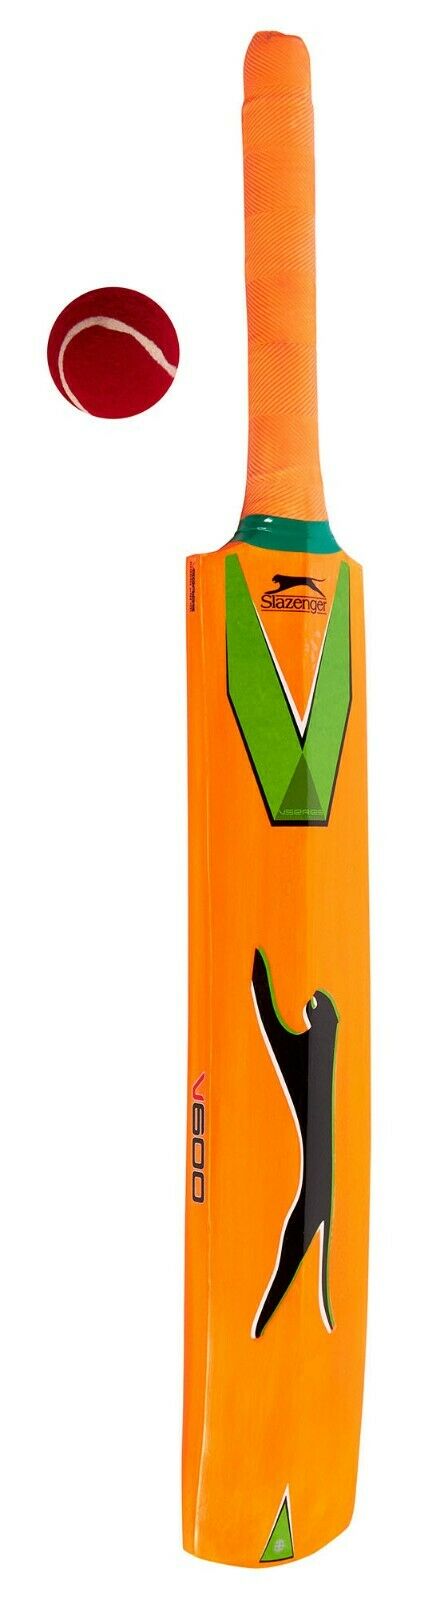 Slazenger V600 Cricket Bat Size 6 Tape Ball Bat